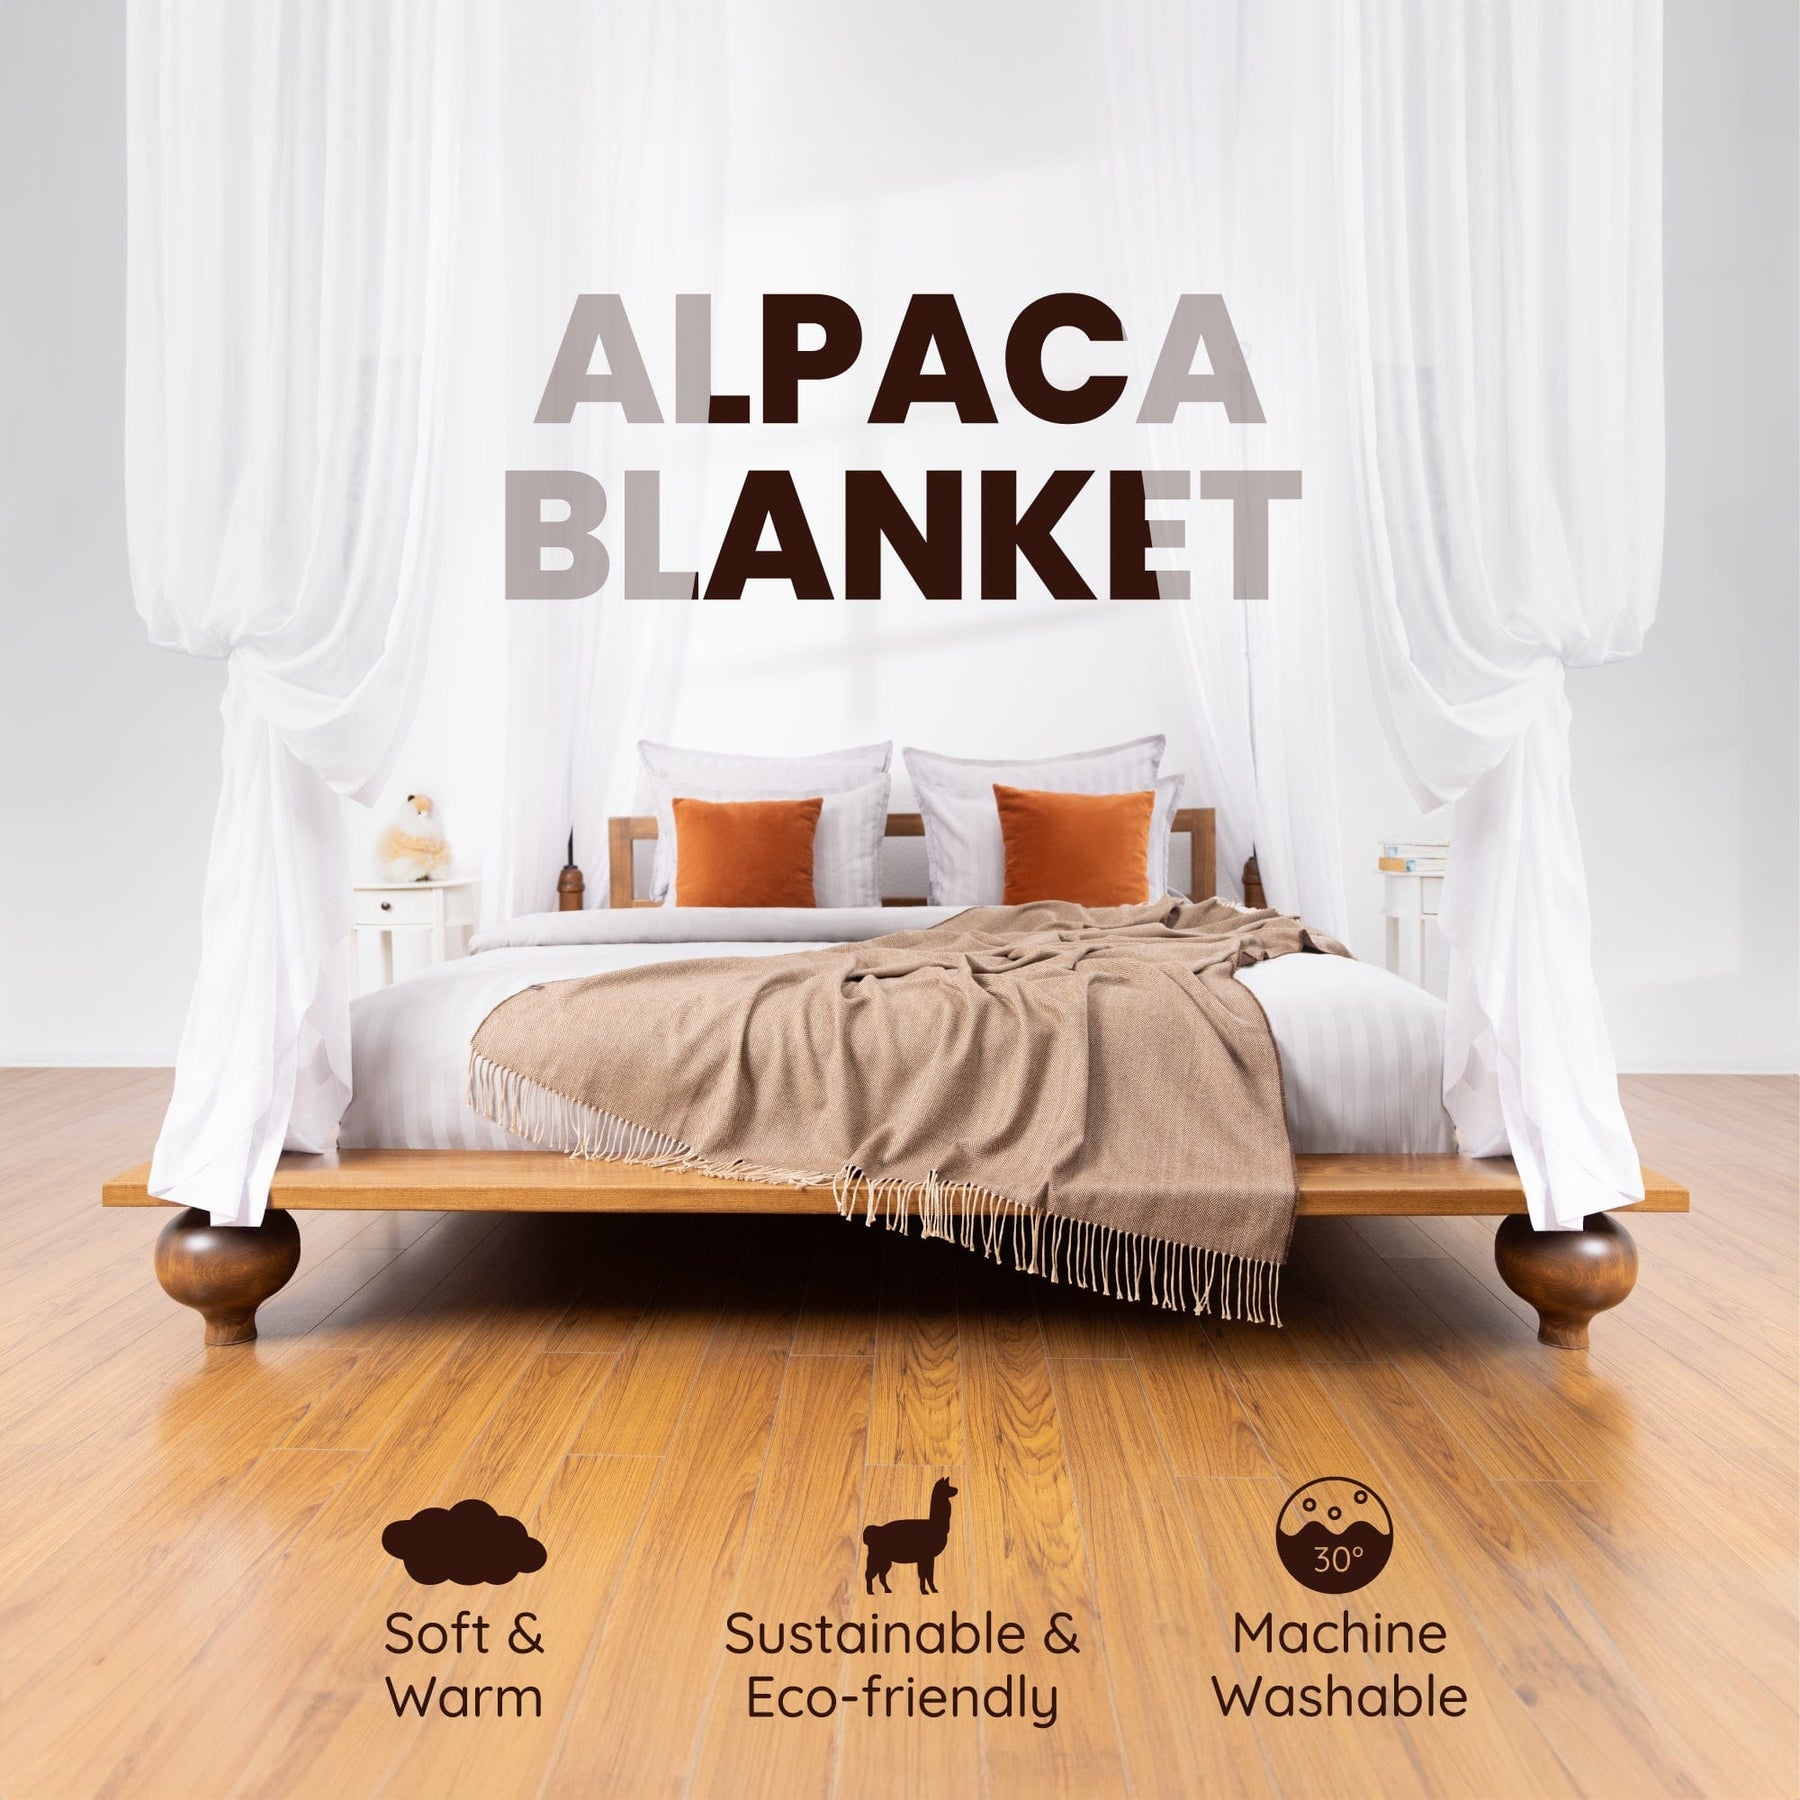 Alpaca fleece in bedding, a bold innovation